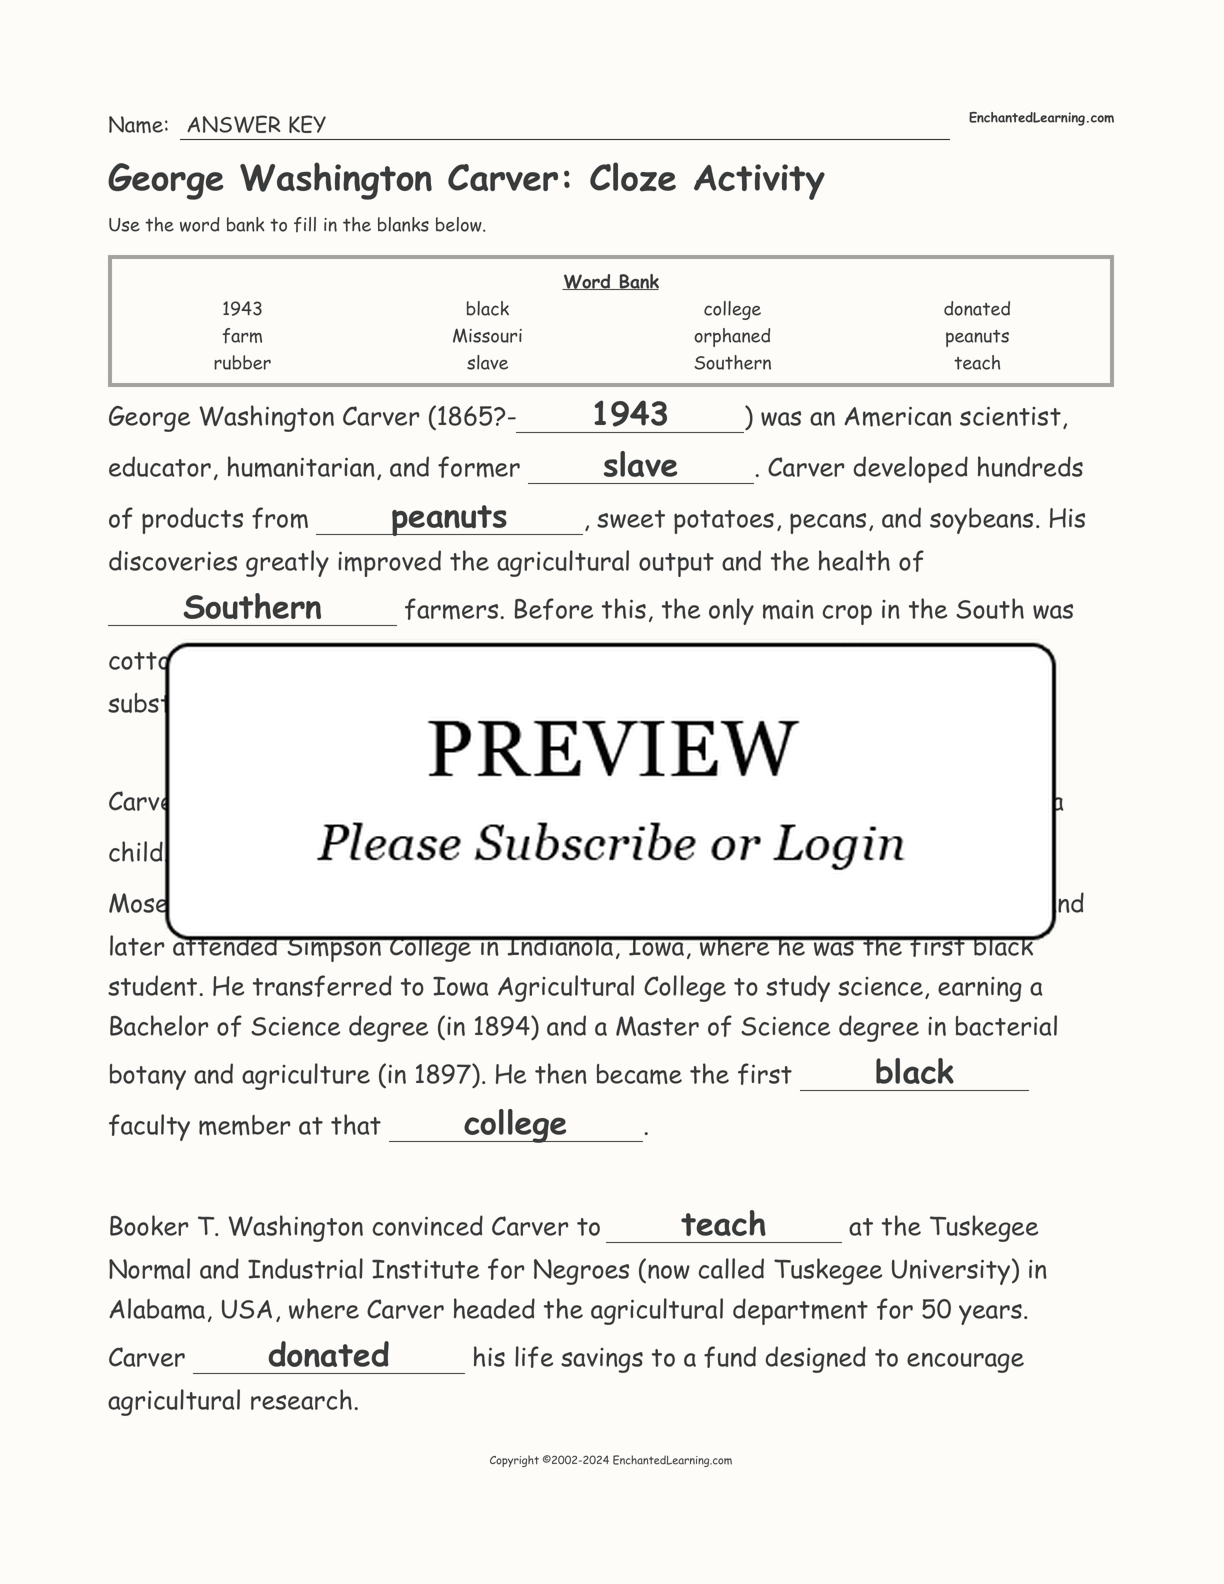 George Washington Carver: Cloze Activity interactive worksheet page 2